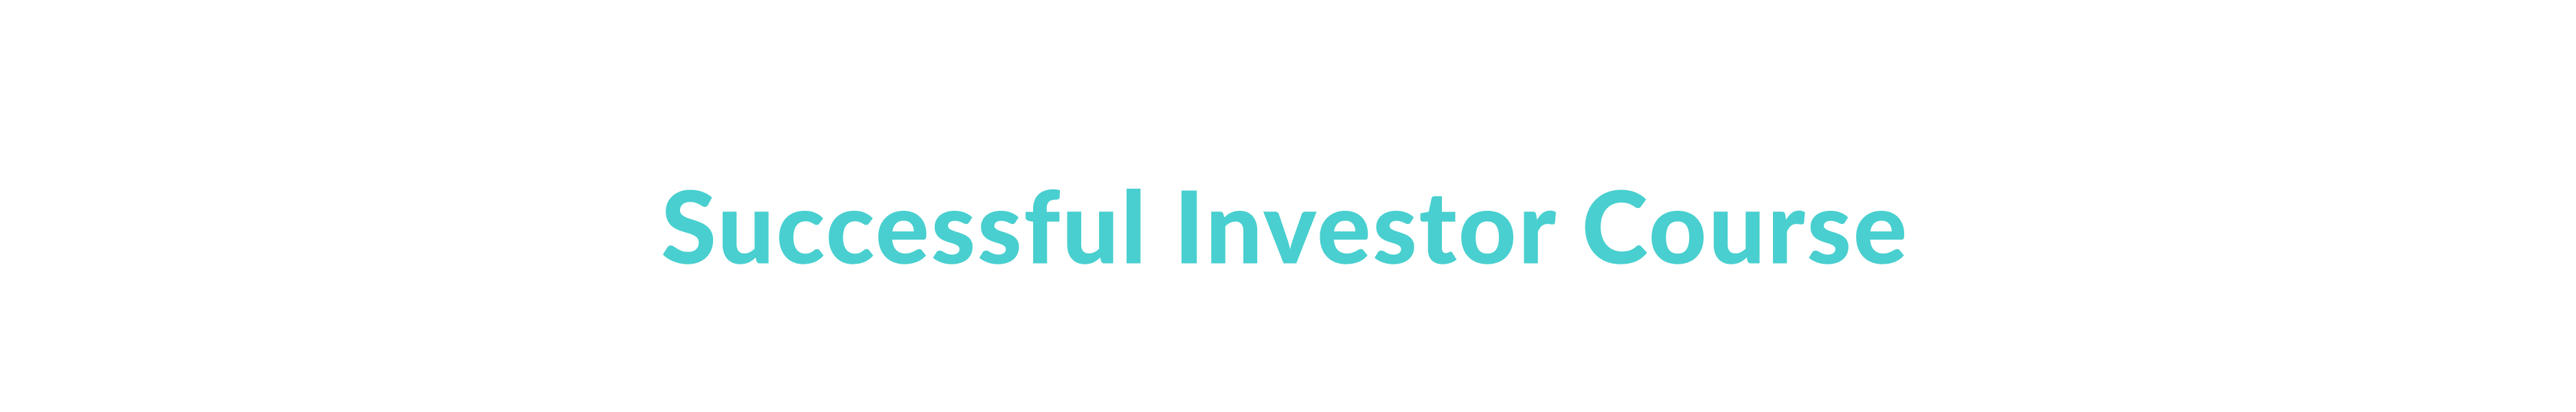 The Full Successful Investor Course (Value $795)